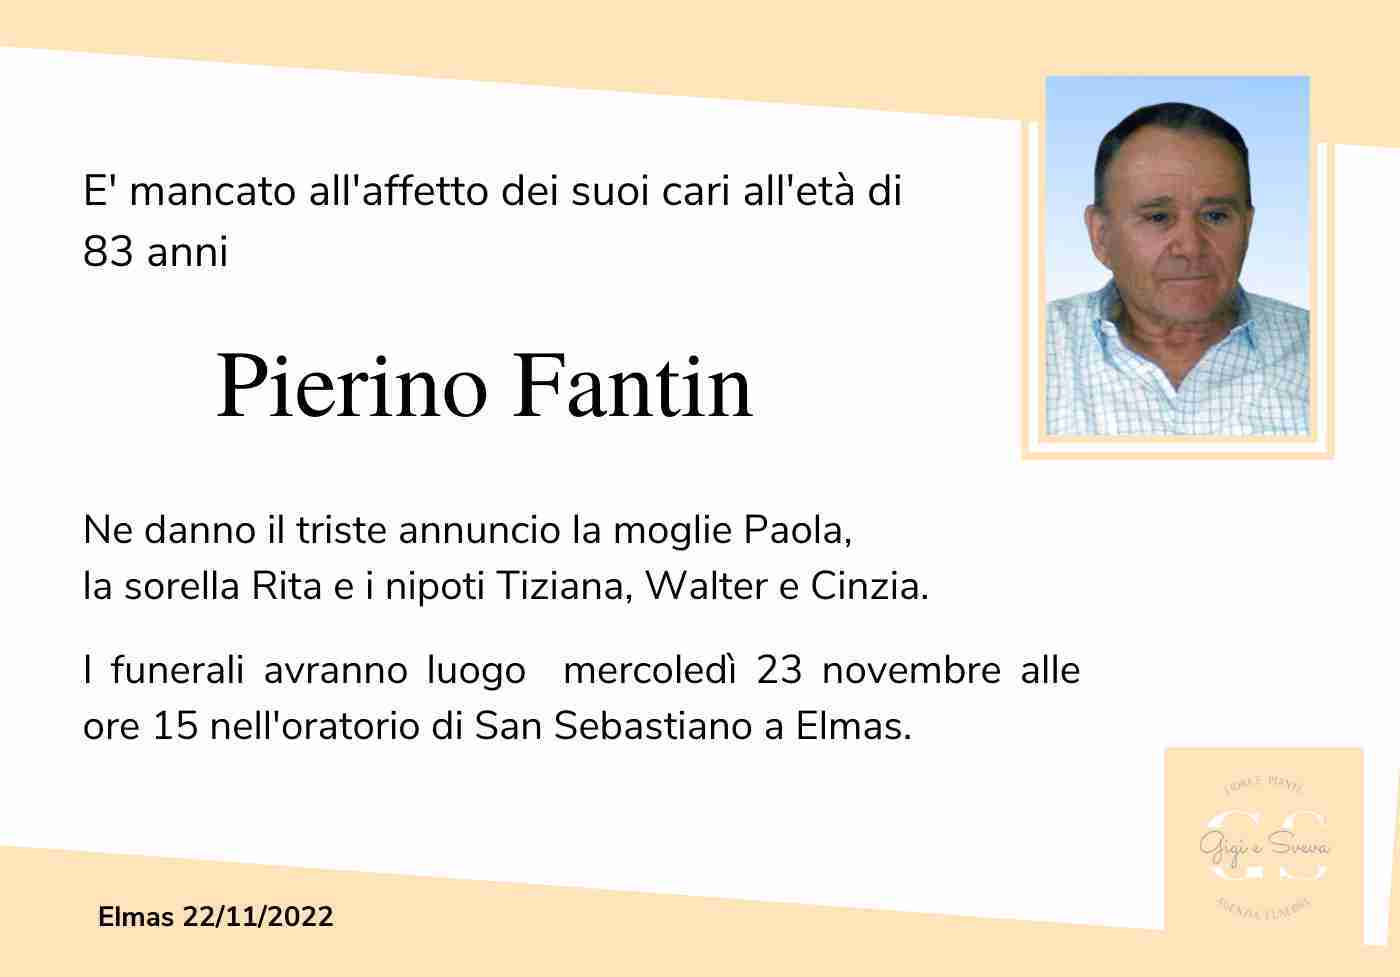 Pierino Fantin